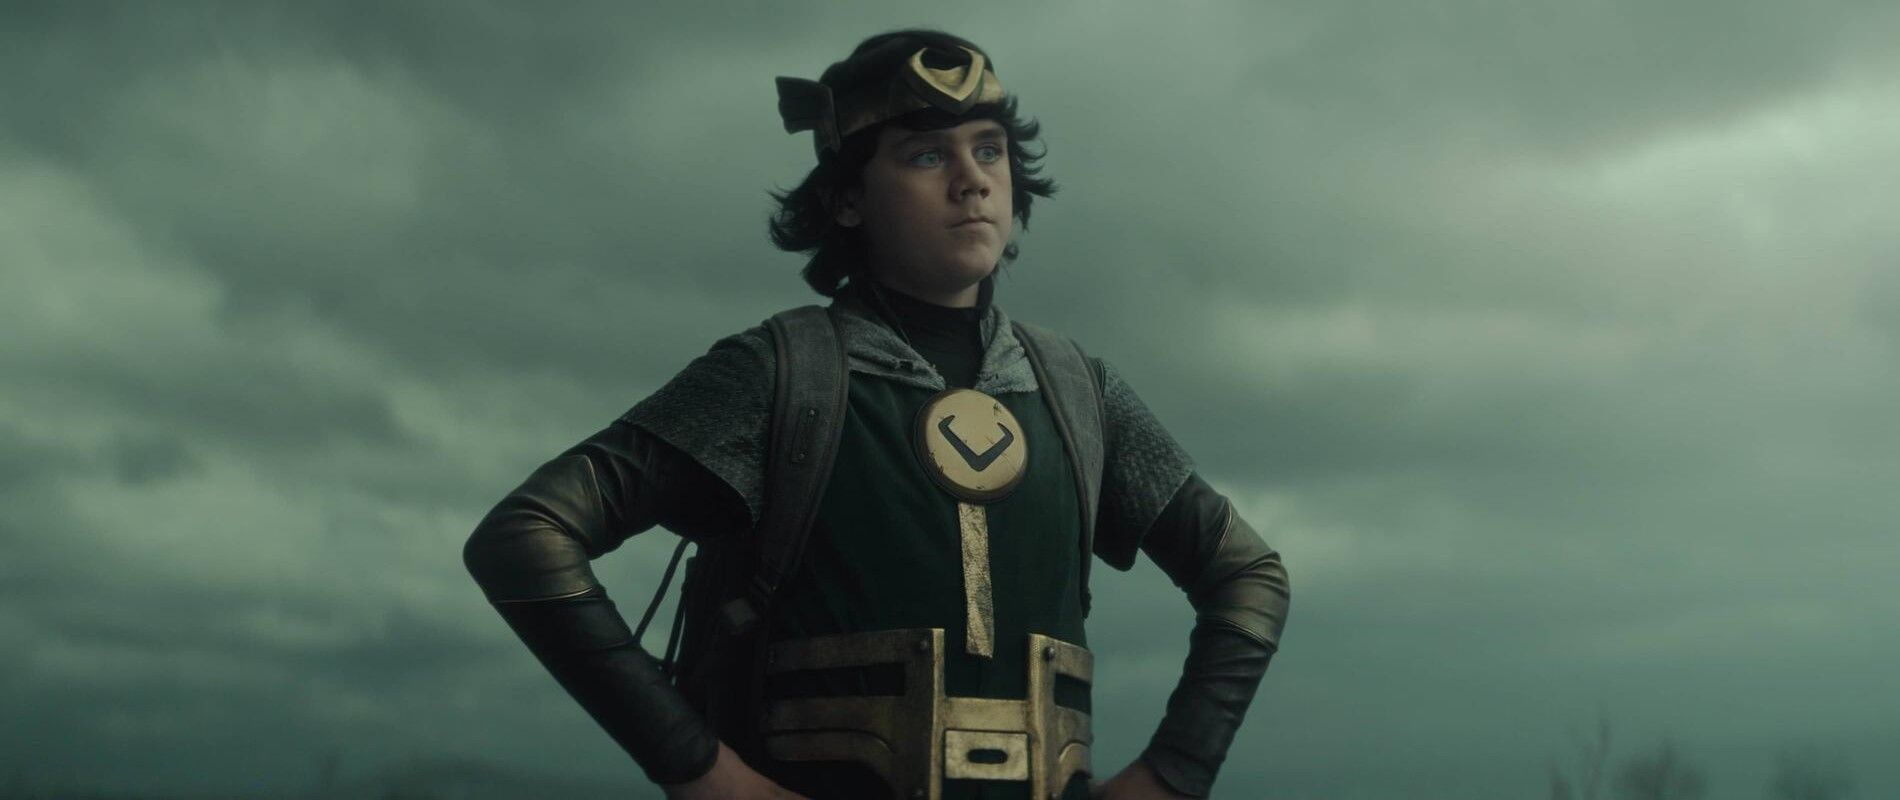 Kid Loki with his hands on his waist in Loki